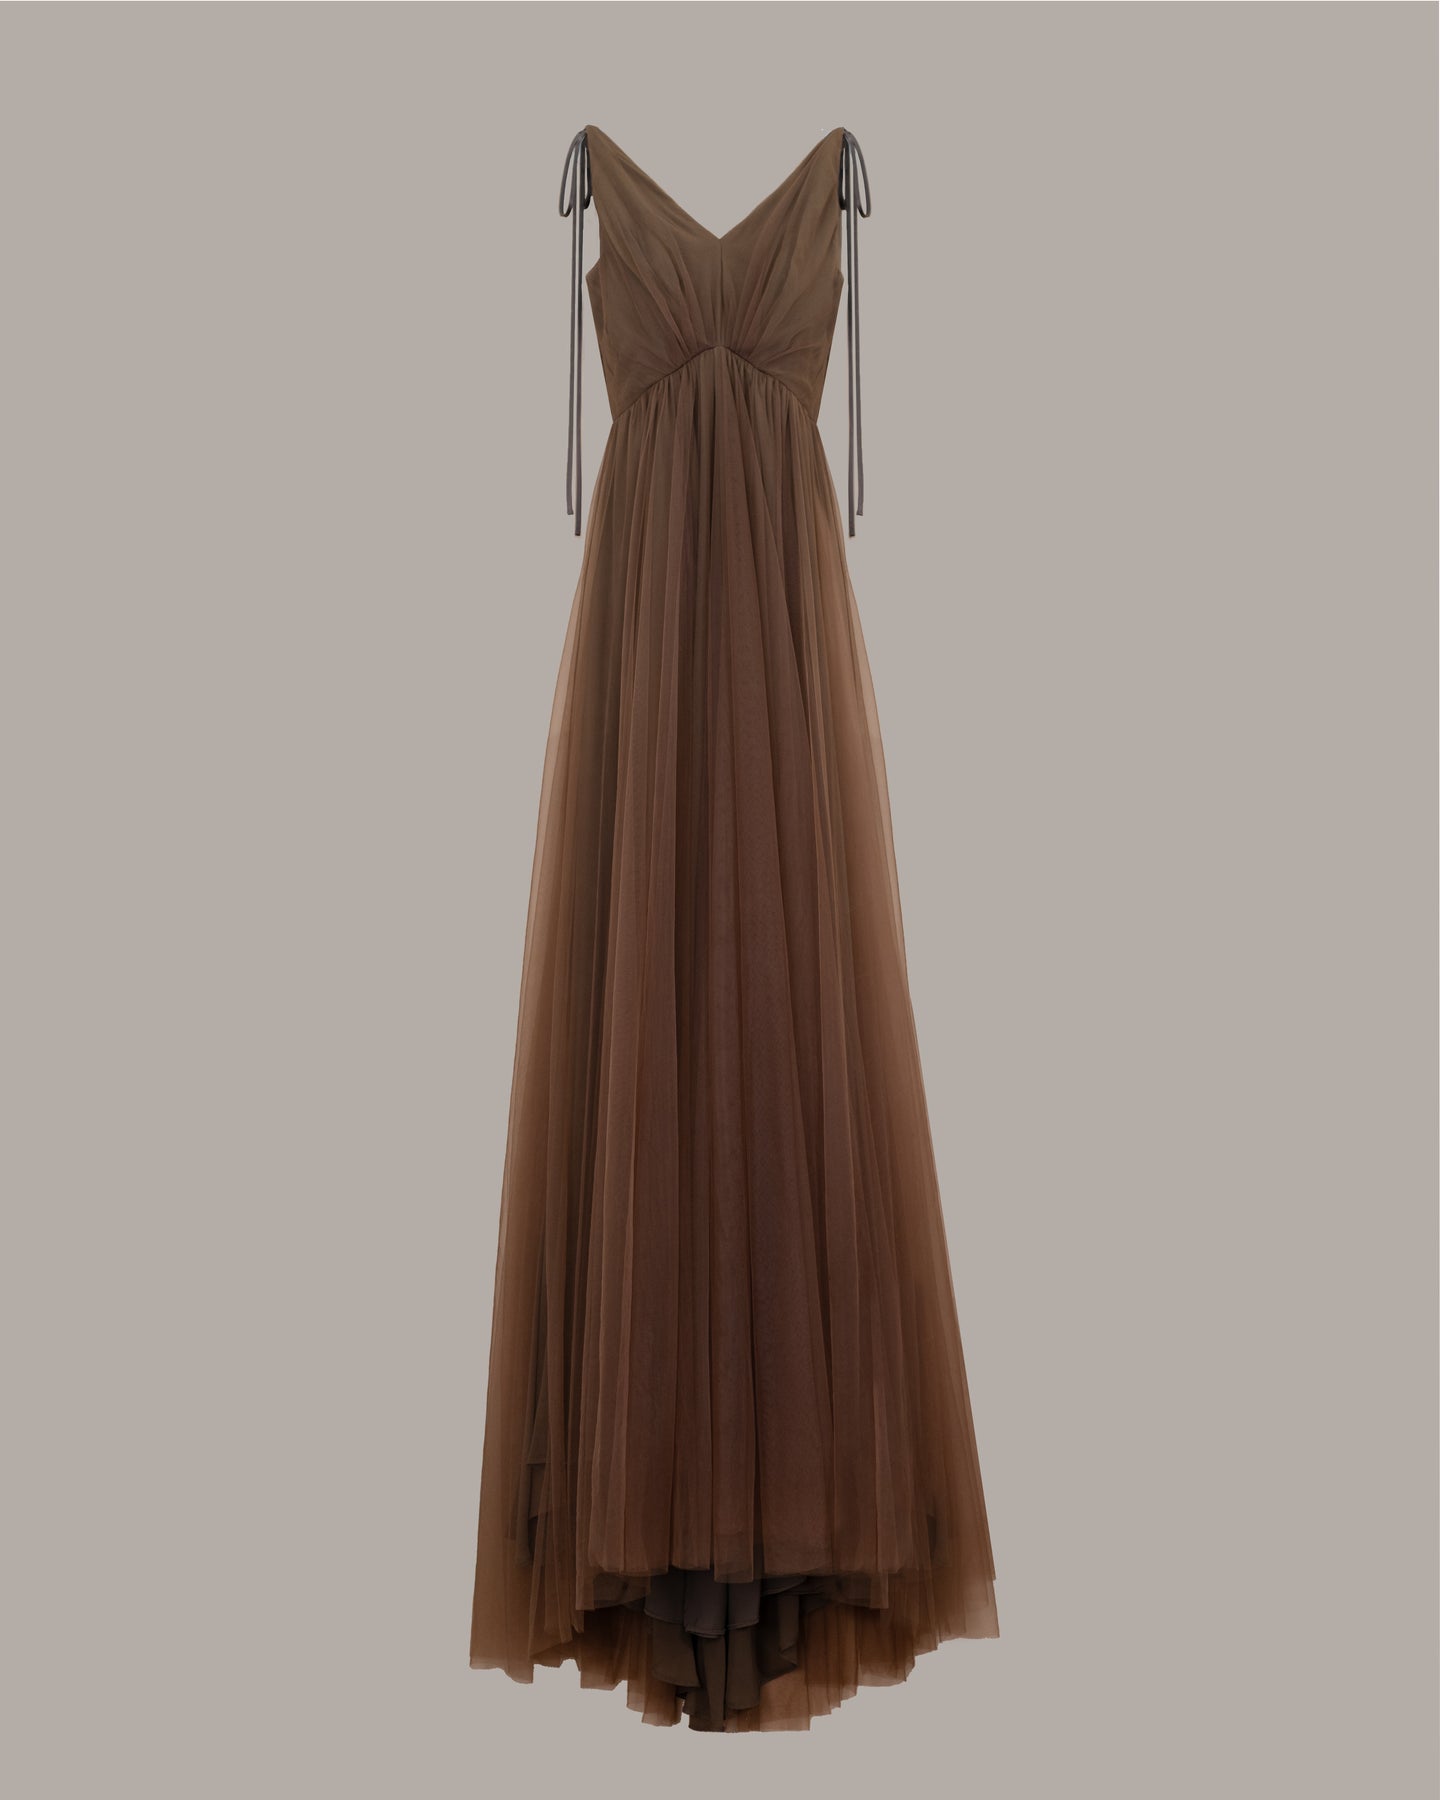 Brown dress